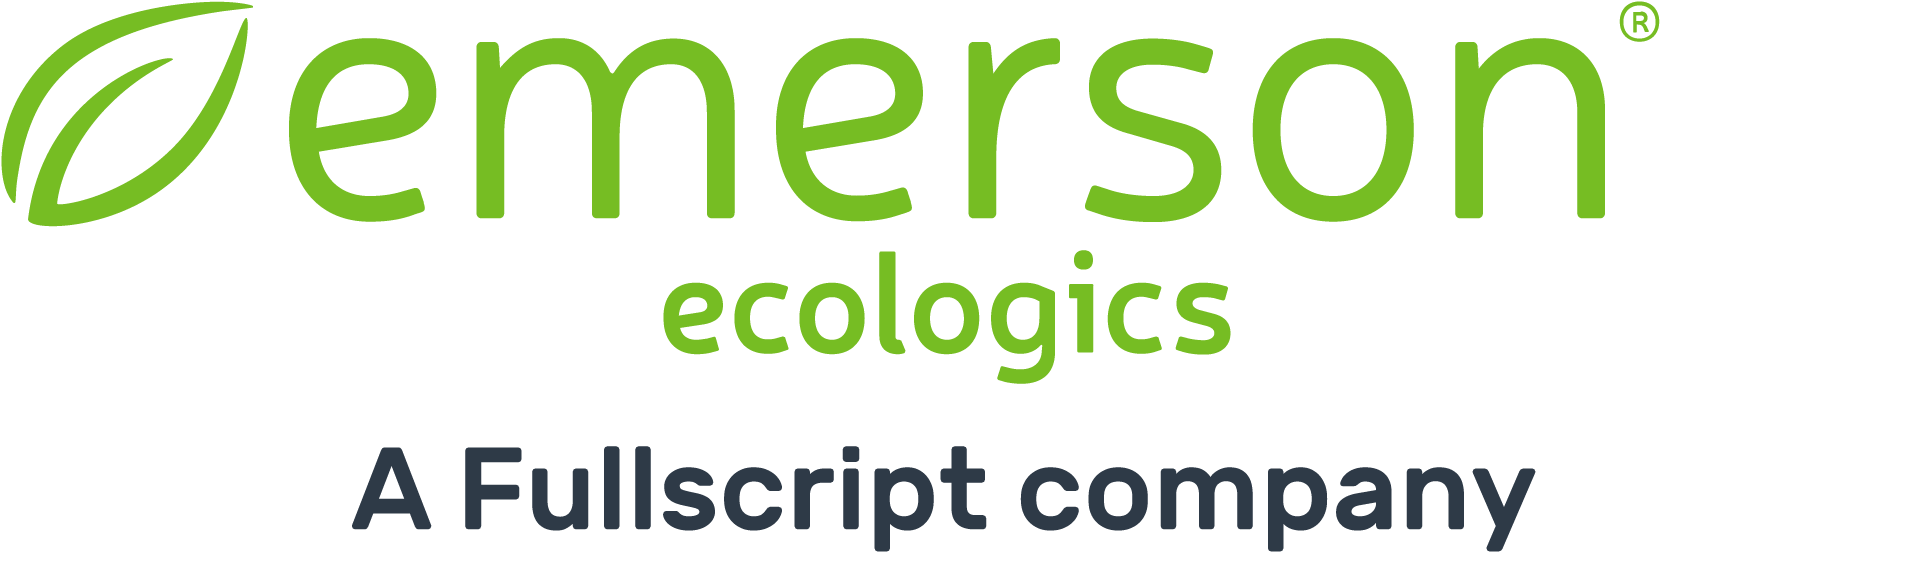 Emerson Ecologics logo